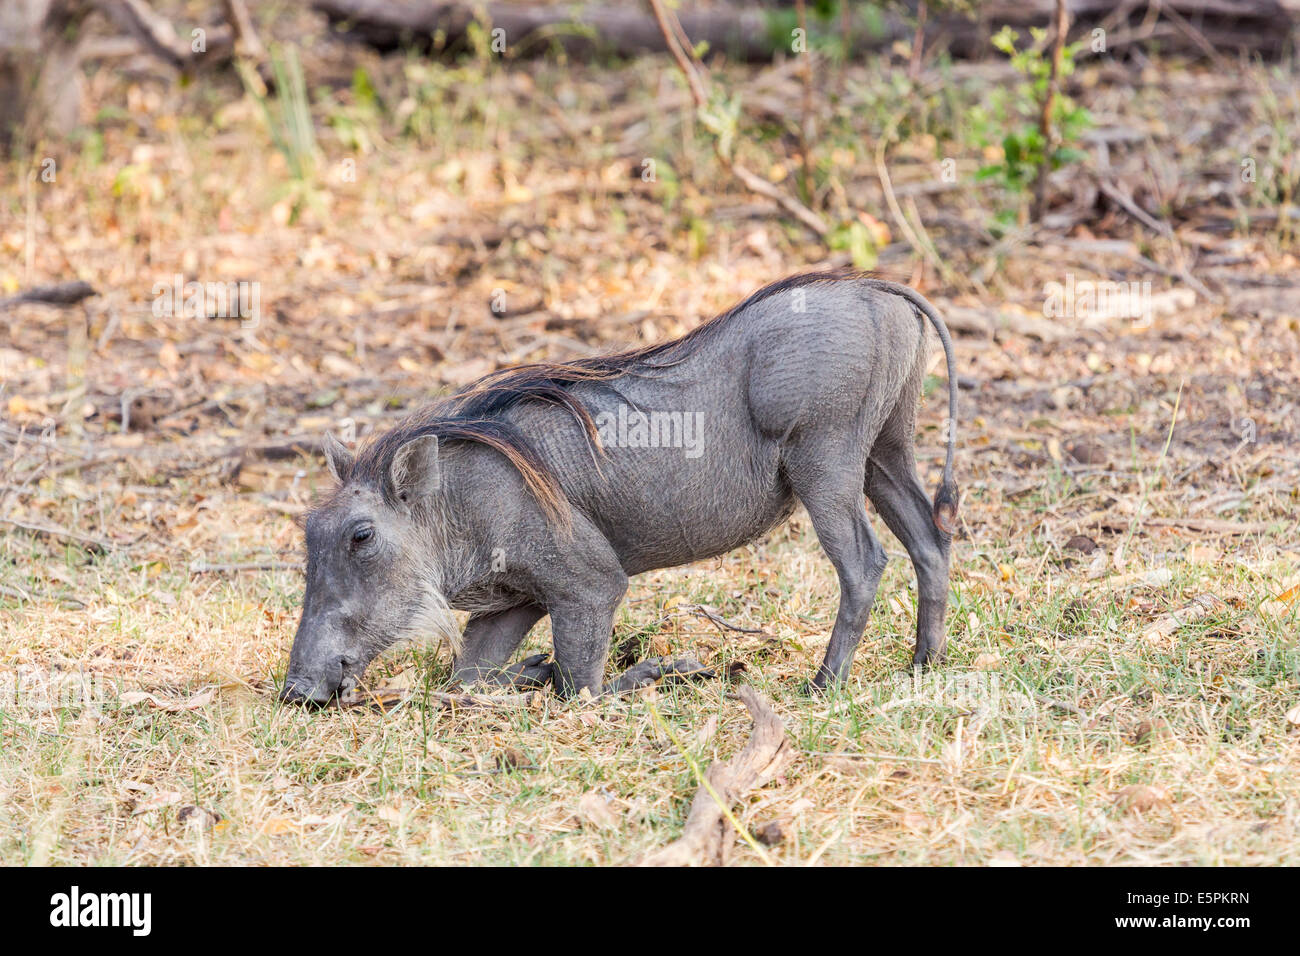 Common warthog, Phacochoerus africanus, in characteristic kneeling ...